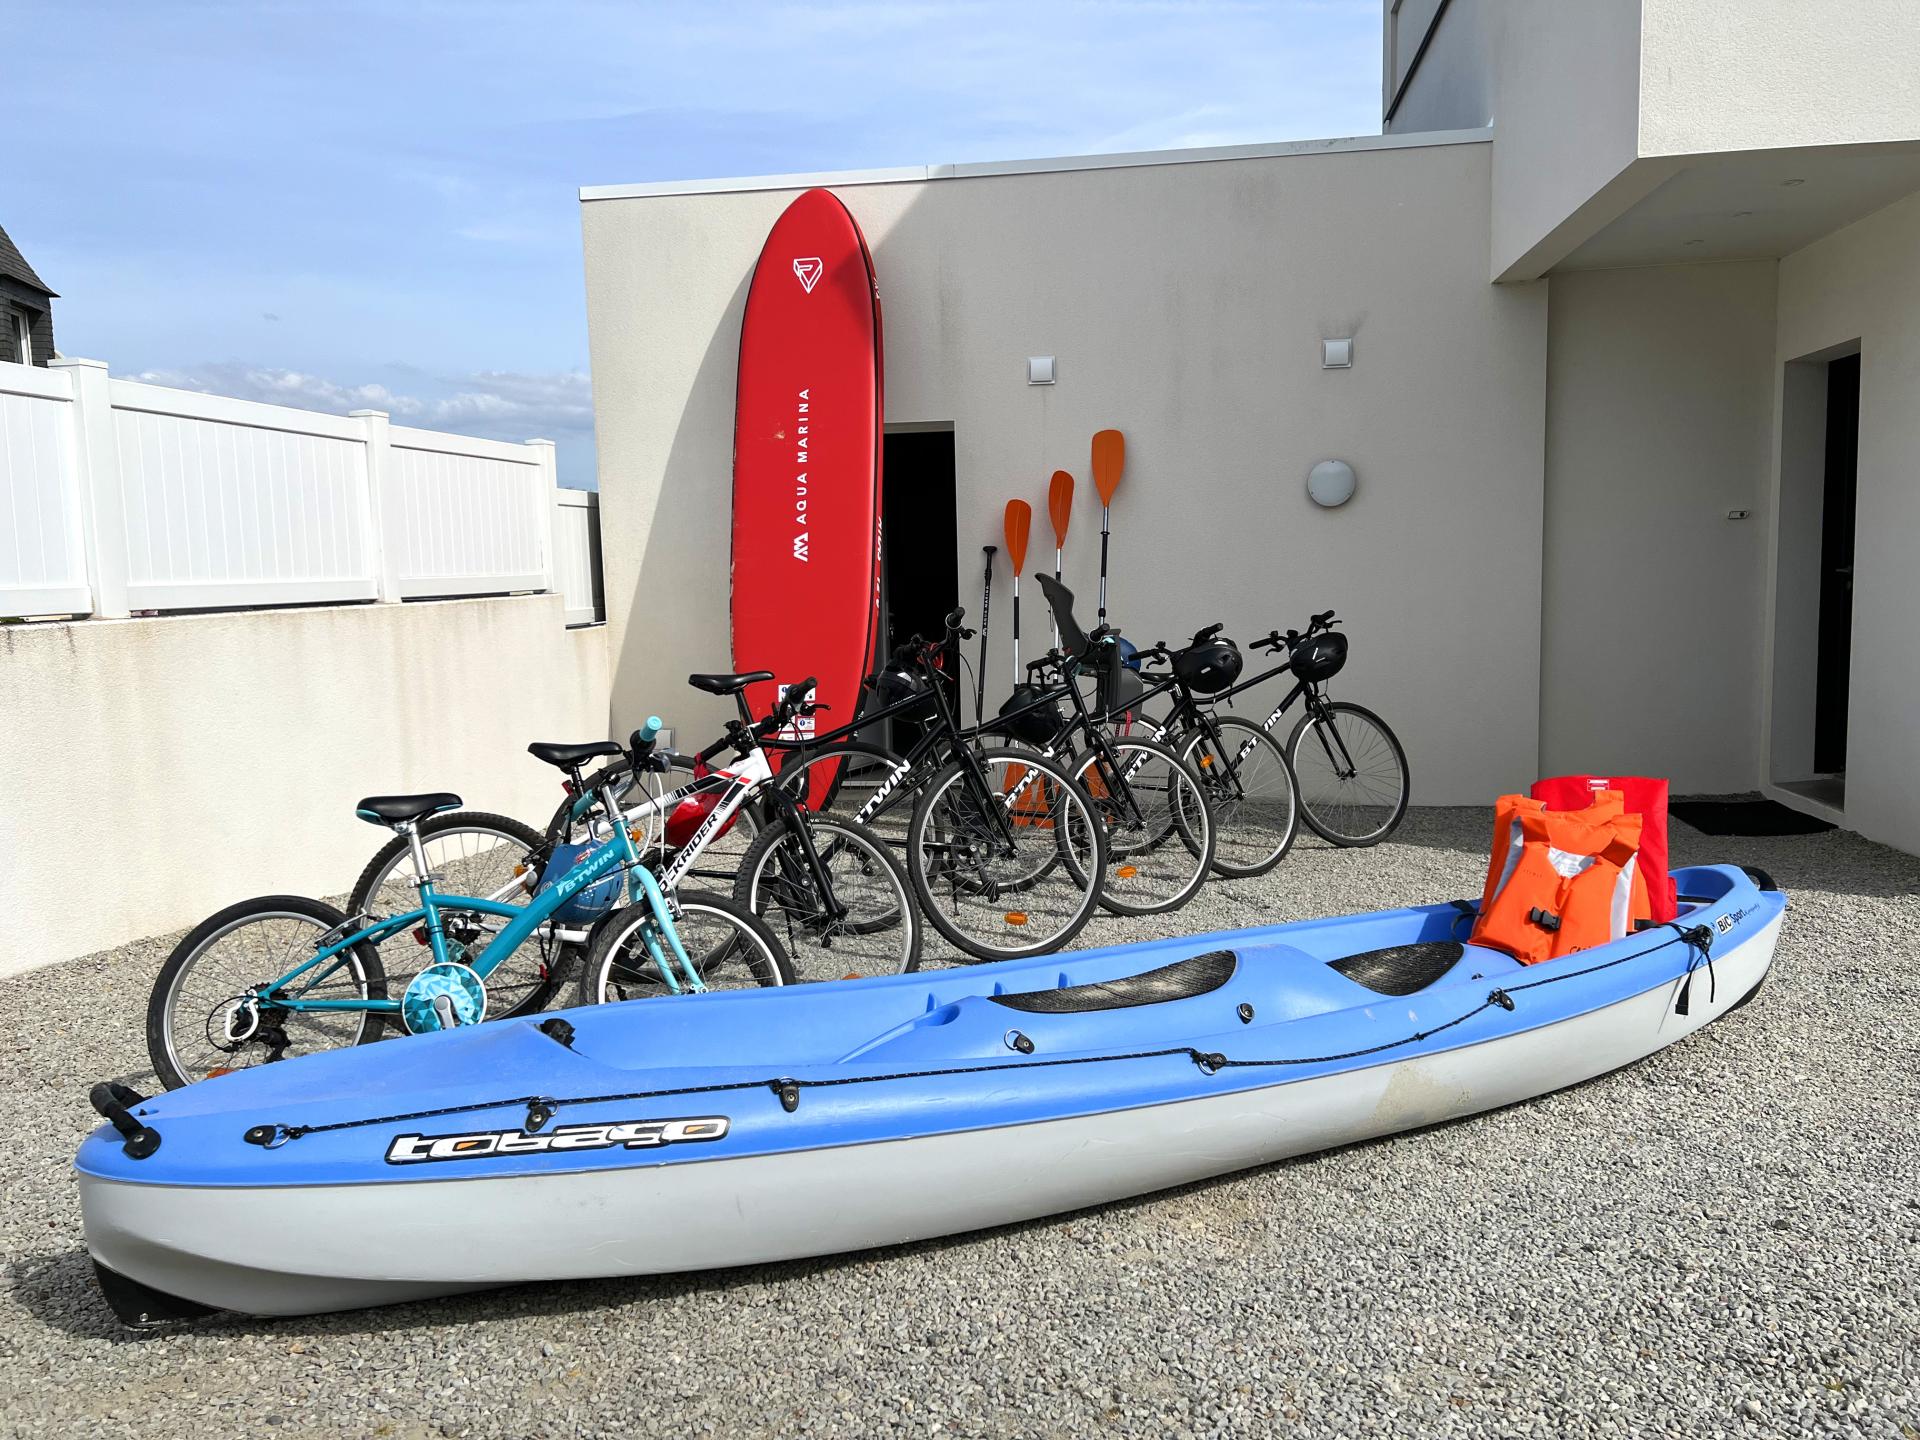 6 vélos 1 kayak, 1 stand-up-paddle